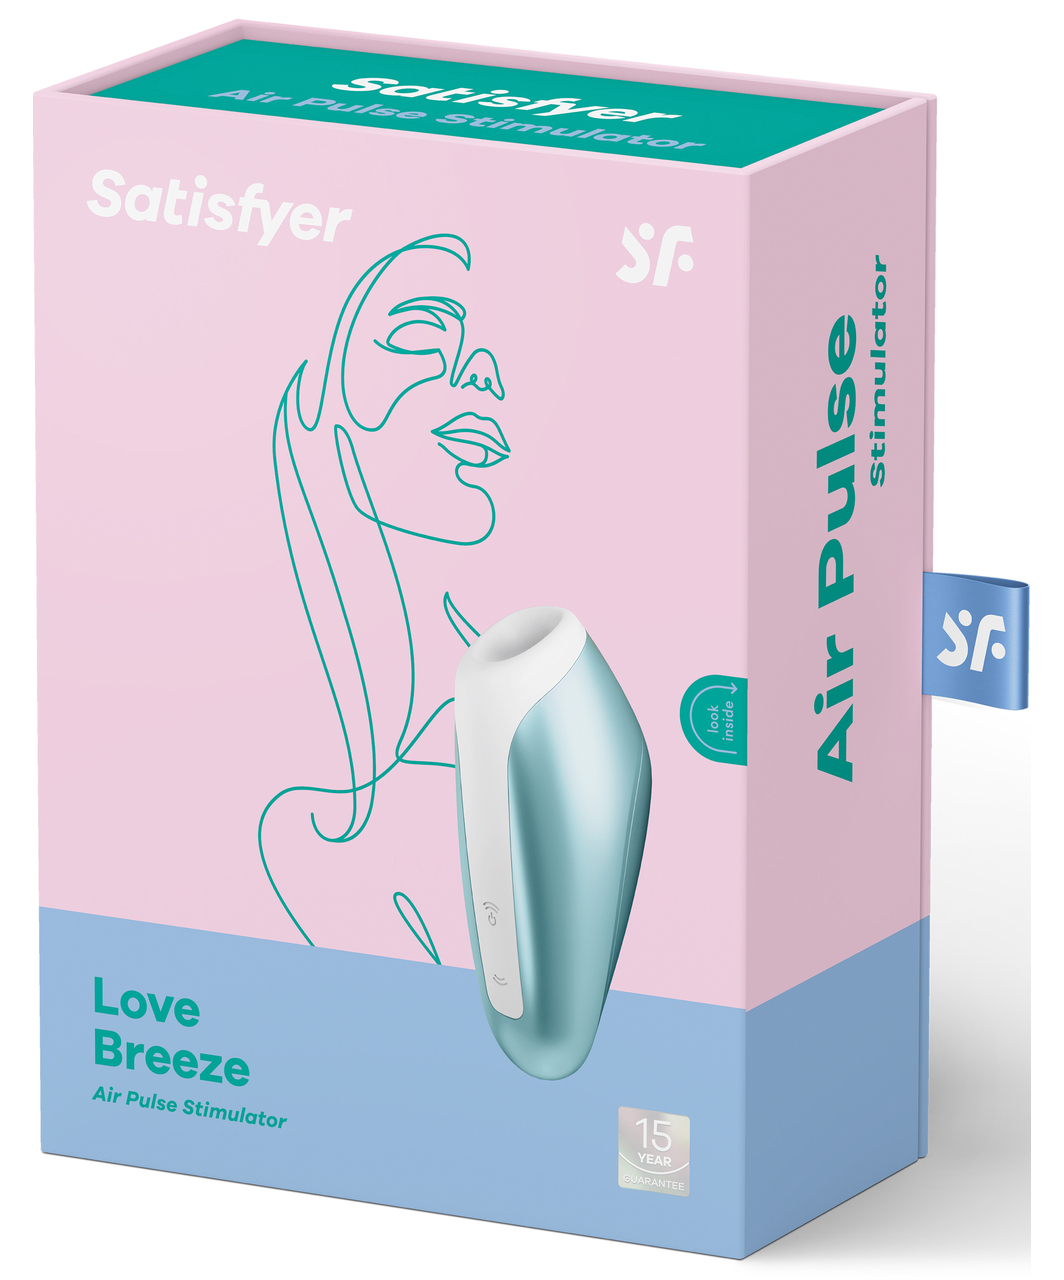 Satisfyer Love Breeze clitoral stimulator